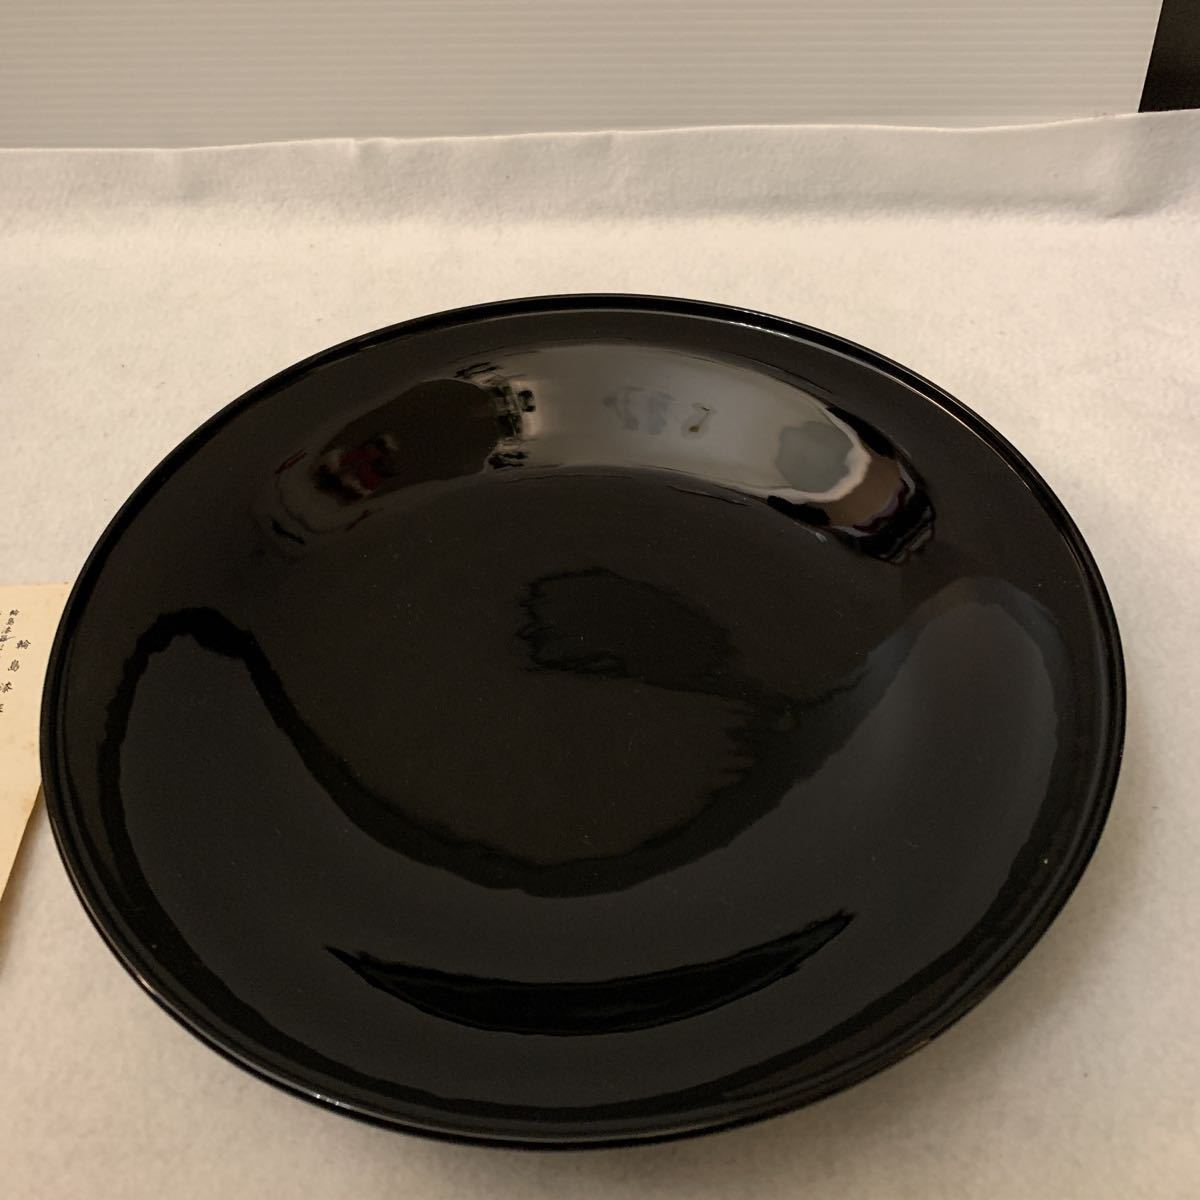  unused long-term storage wheel island paint pastry pot 8 size lacquer black 